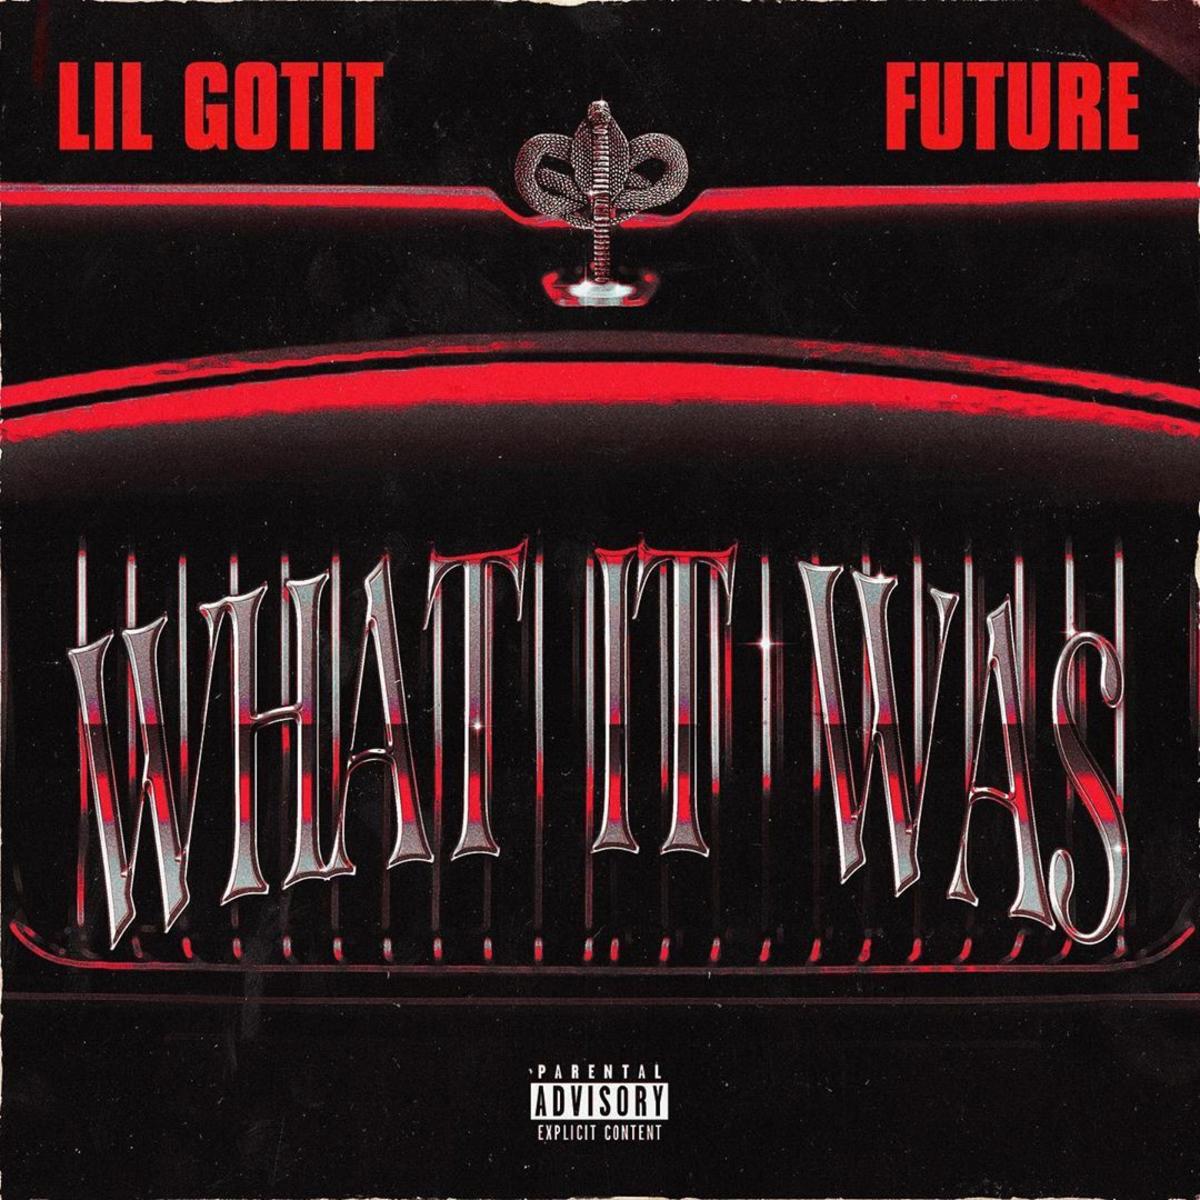 Lil Gotit & Future – “What It Was” [Audio]